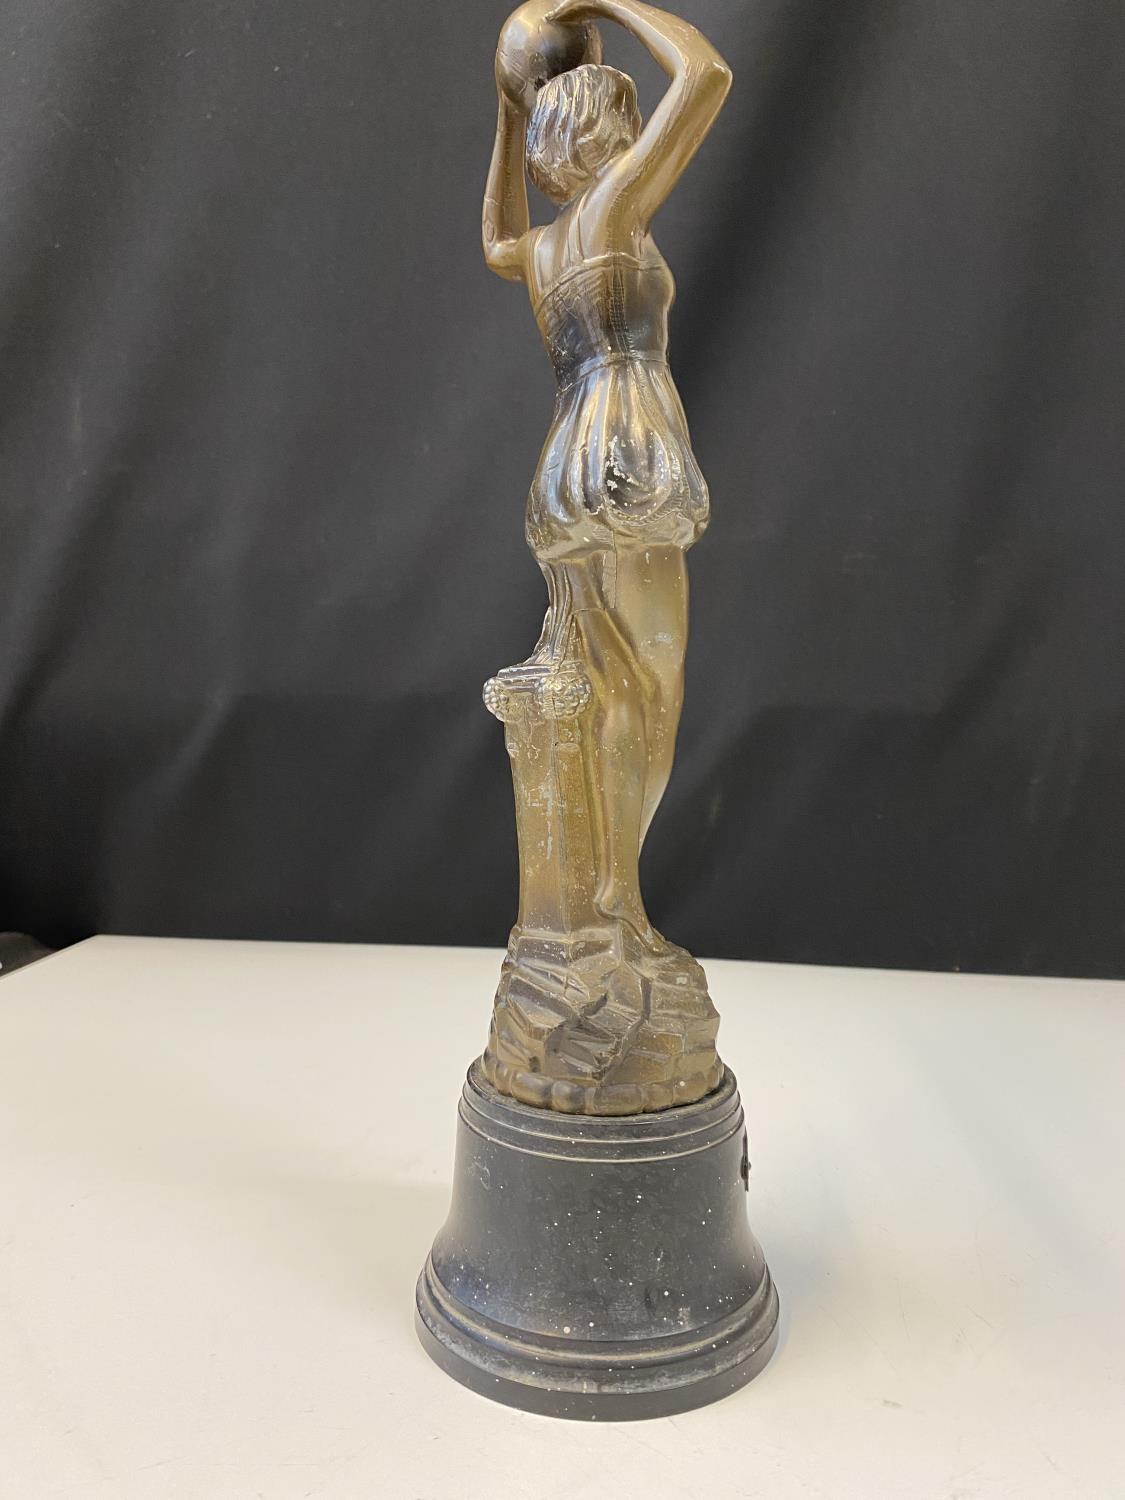 Le Matin Pewter art deco statue, H38cm x W10cm - Image 7 of 8